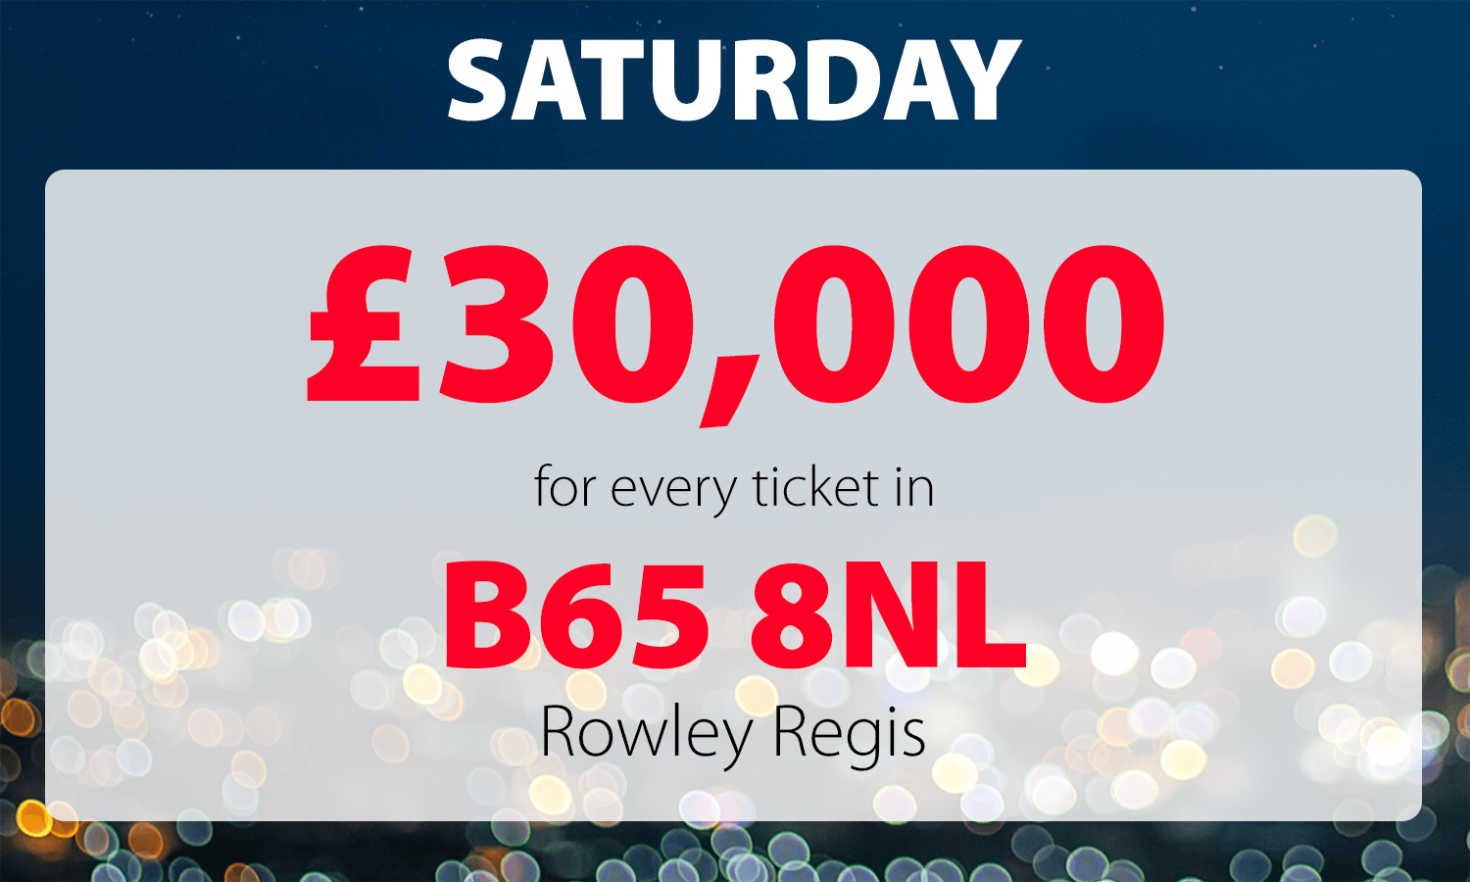 One lucky winner in postcode B65 8NL has won an amazing £30,000